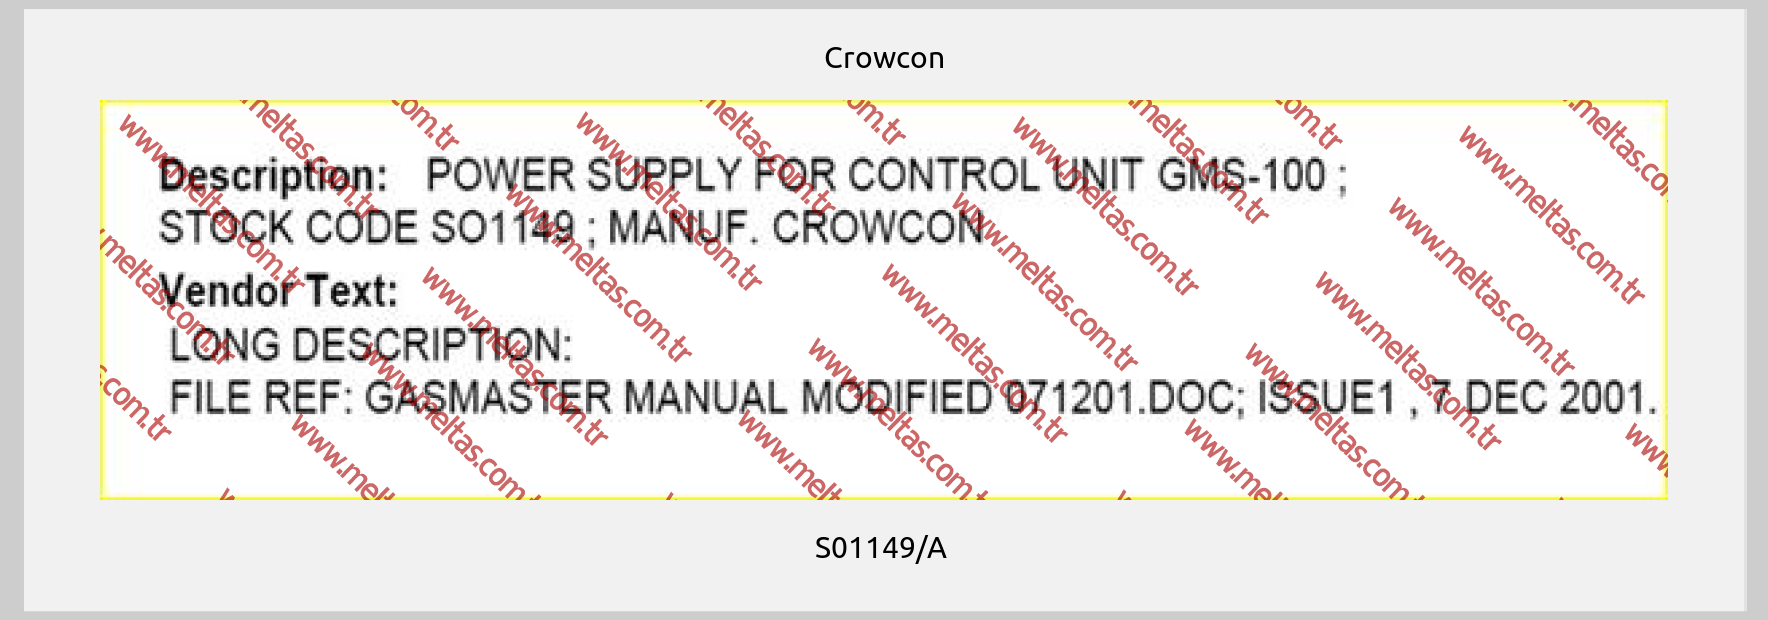 Crowcon - S01149/A 